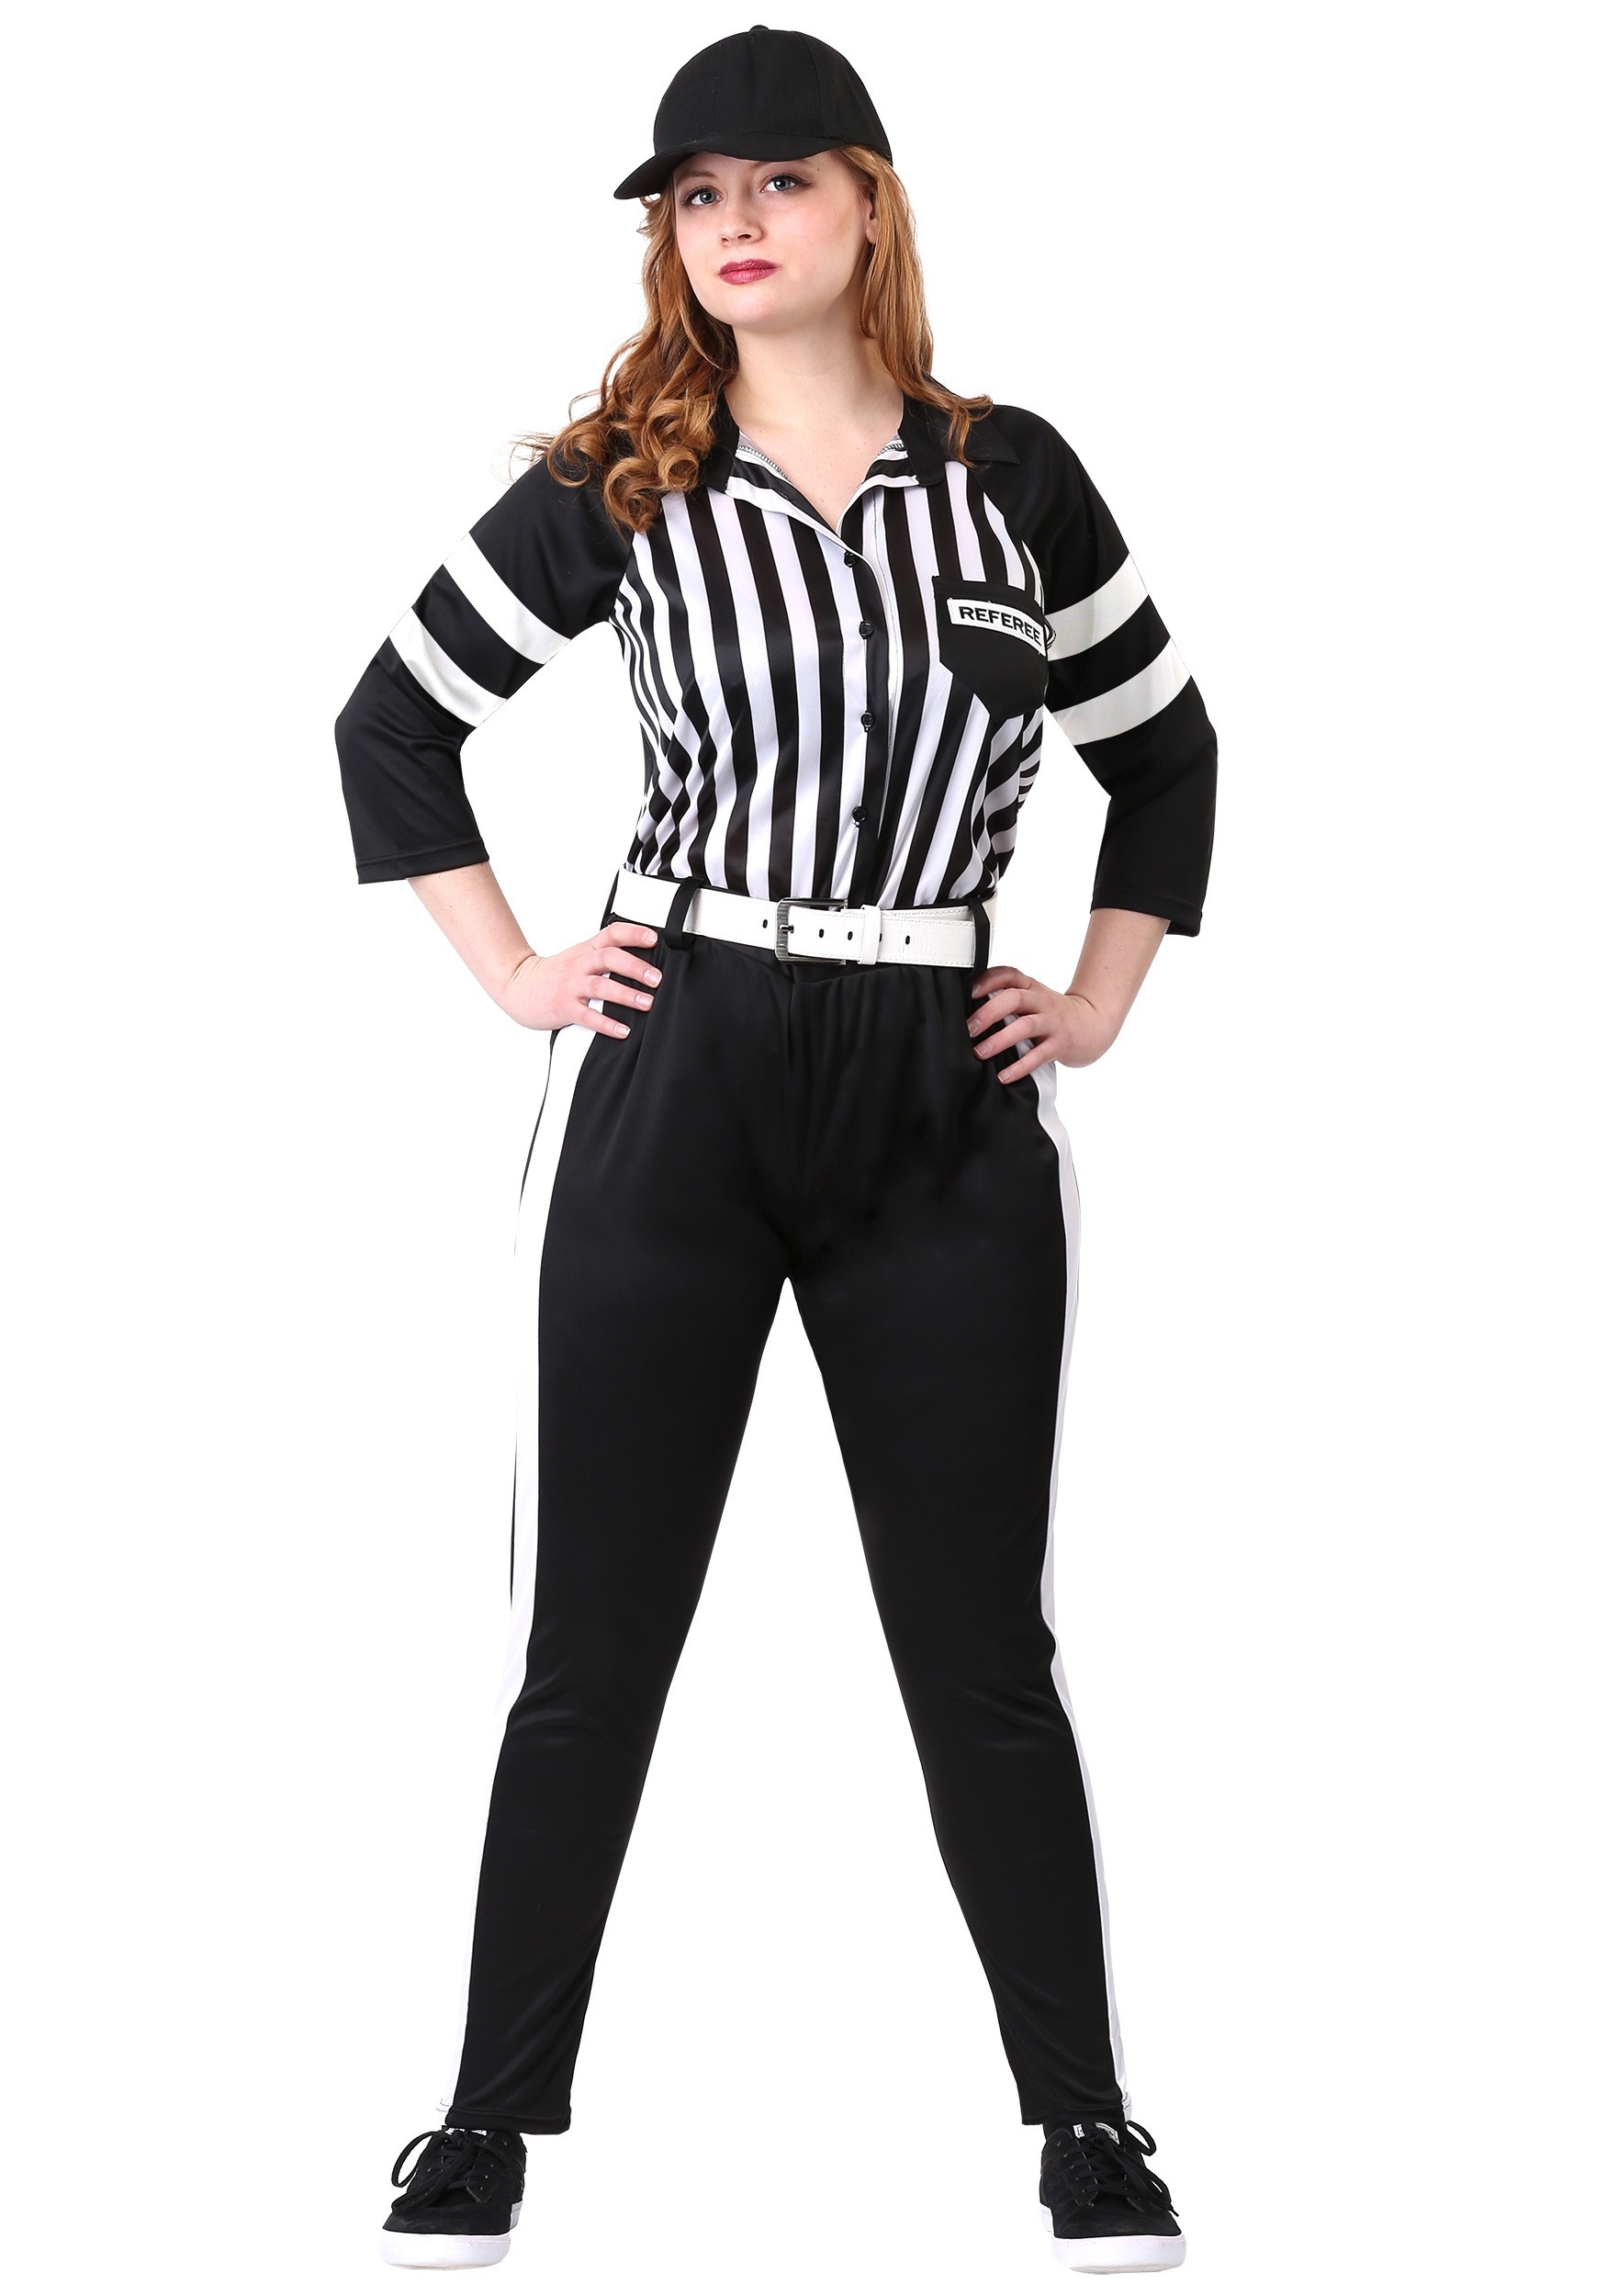 Plus Size Women's Referee Costume